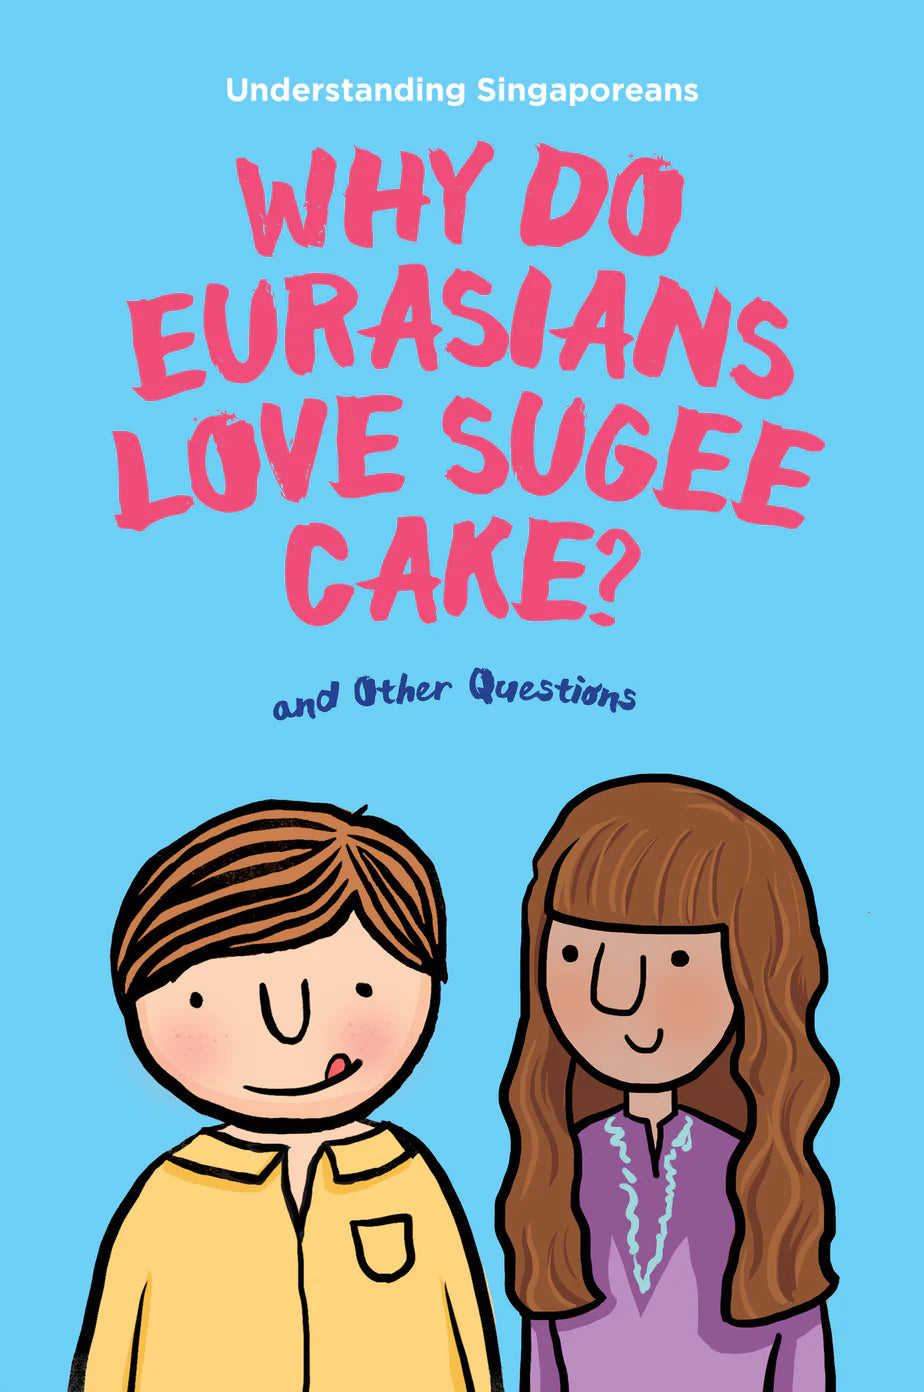 Understanding Singaporeans: Why Do Eurasians Love Sugee Cake